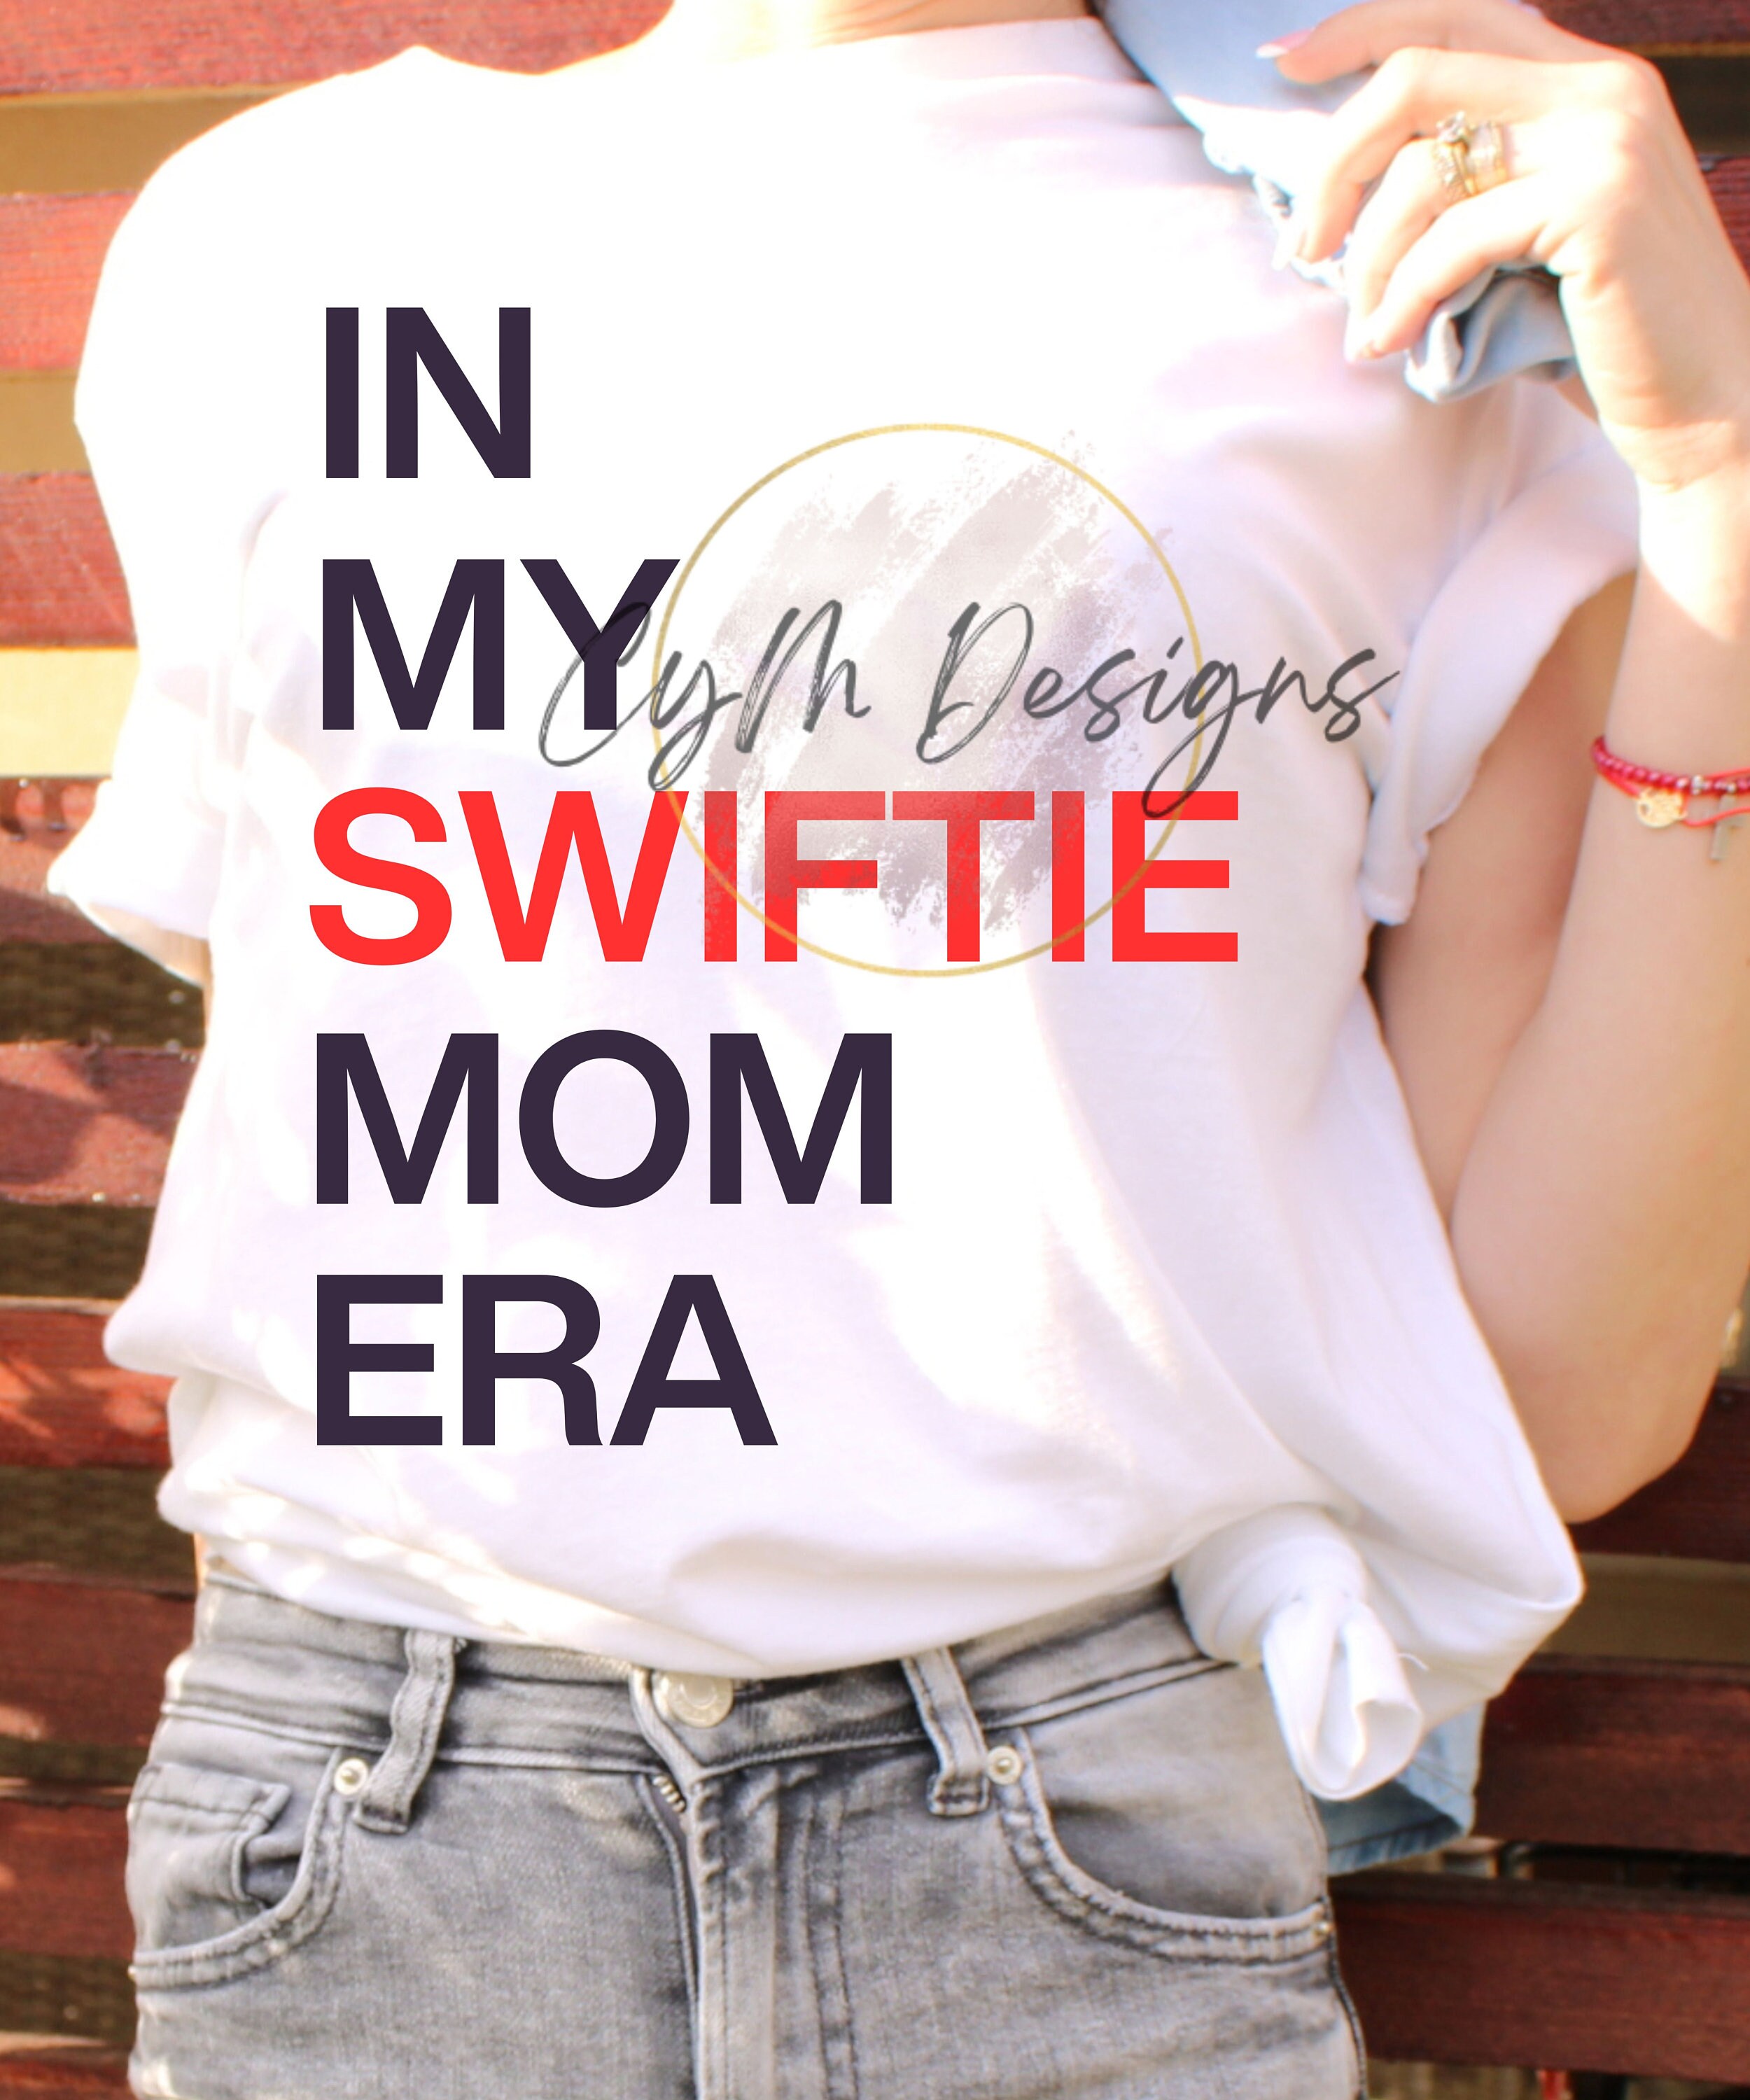 Eras Movie Shirt Mini Swiftie Shirt Swiftie Mom Mommy And Me Eras Kids Shirt  Swiftie Shirt Merch Taylor Swift Eras Tour Shirt Unique - Revetee